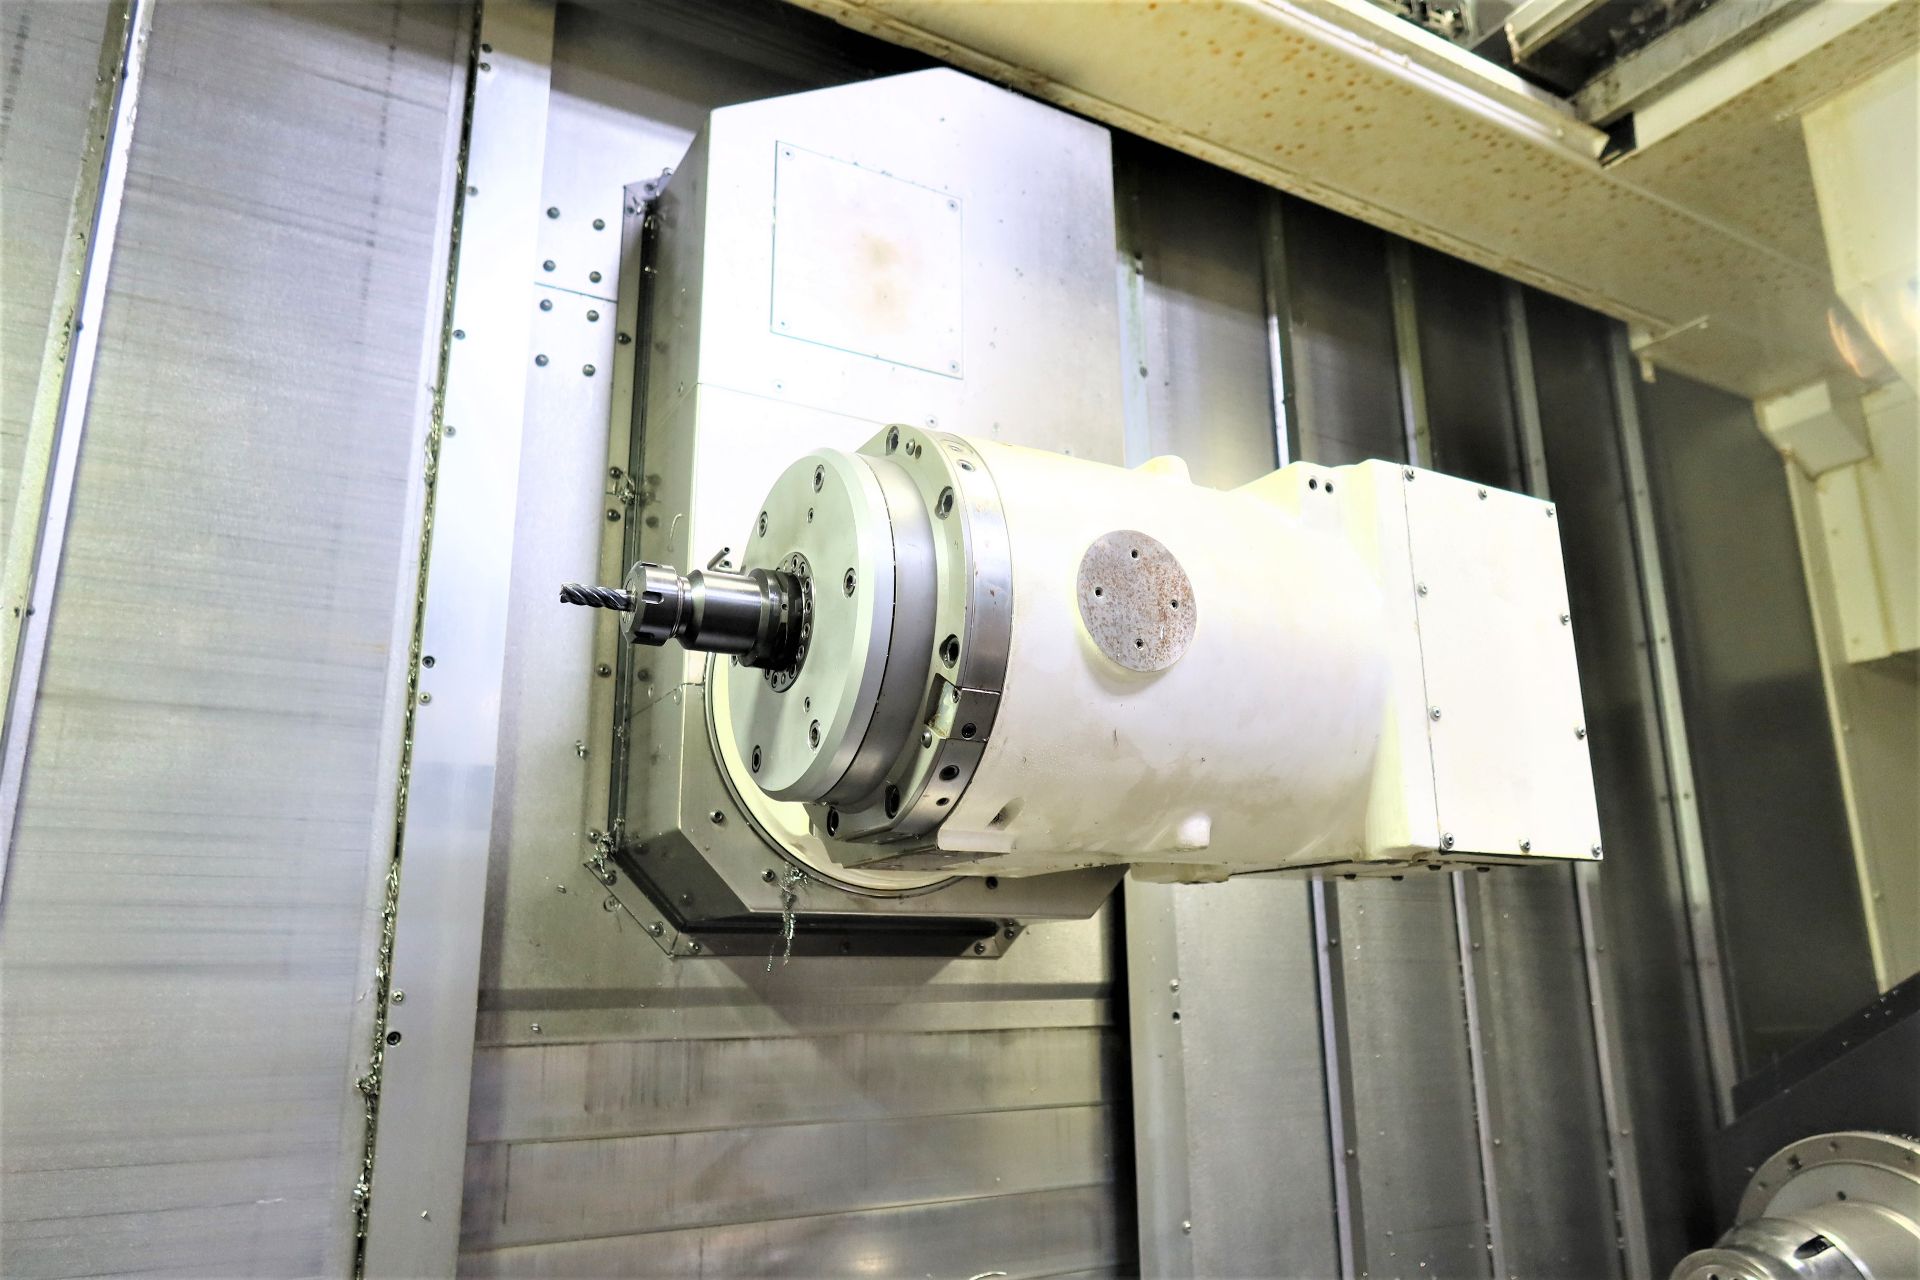 Okuma Multus U3000 5-Axis CNC Mill Lathe, New 2015 - Image 5 of 15